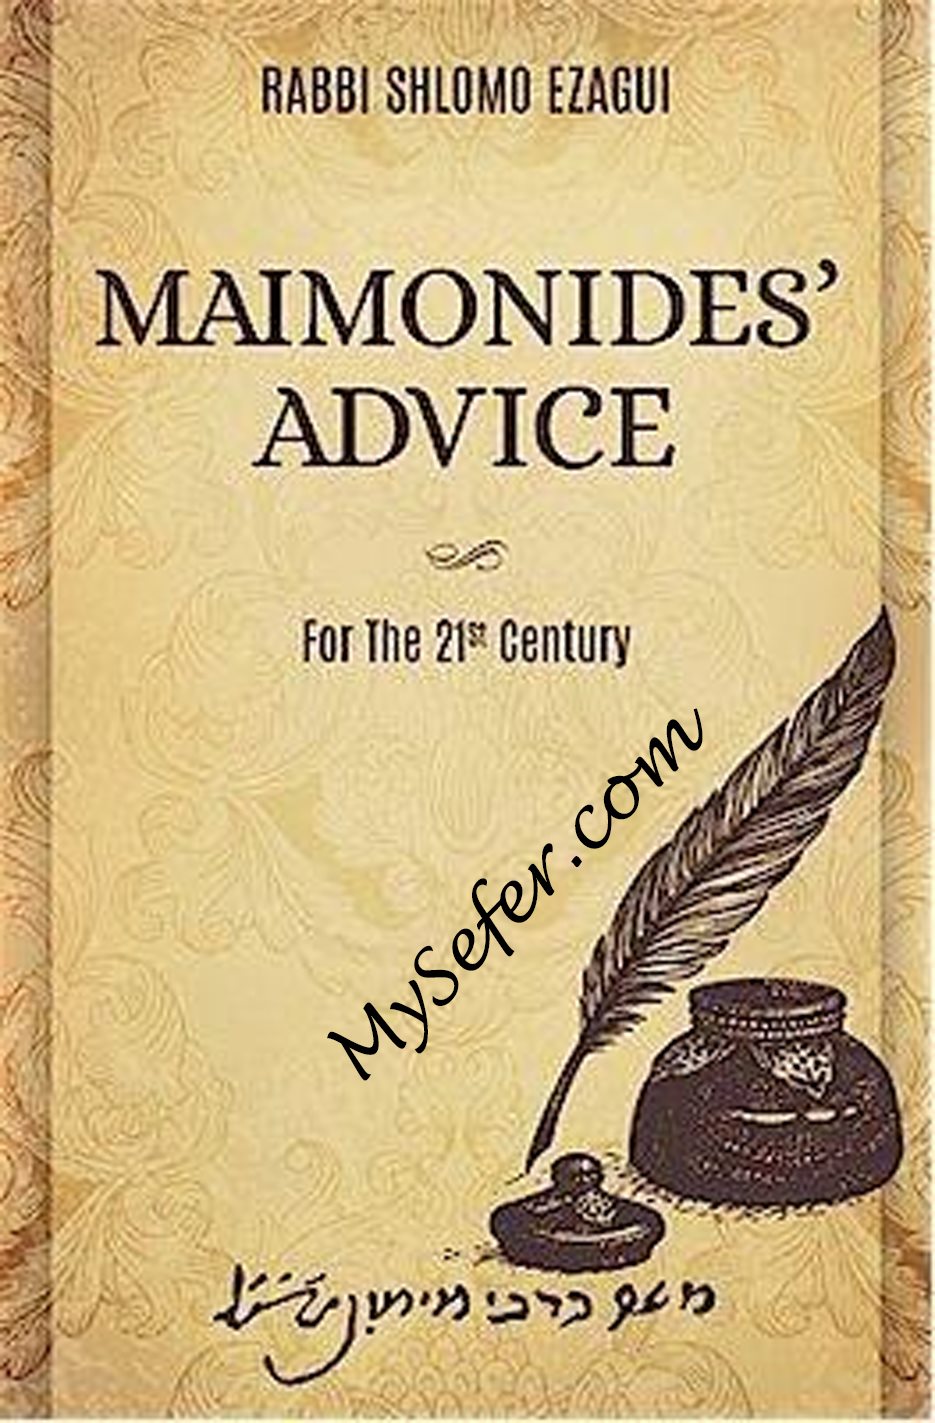 Maimonides' Advice for 21st Century